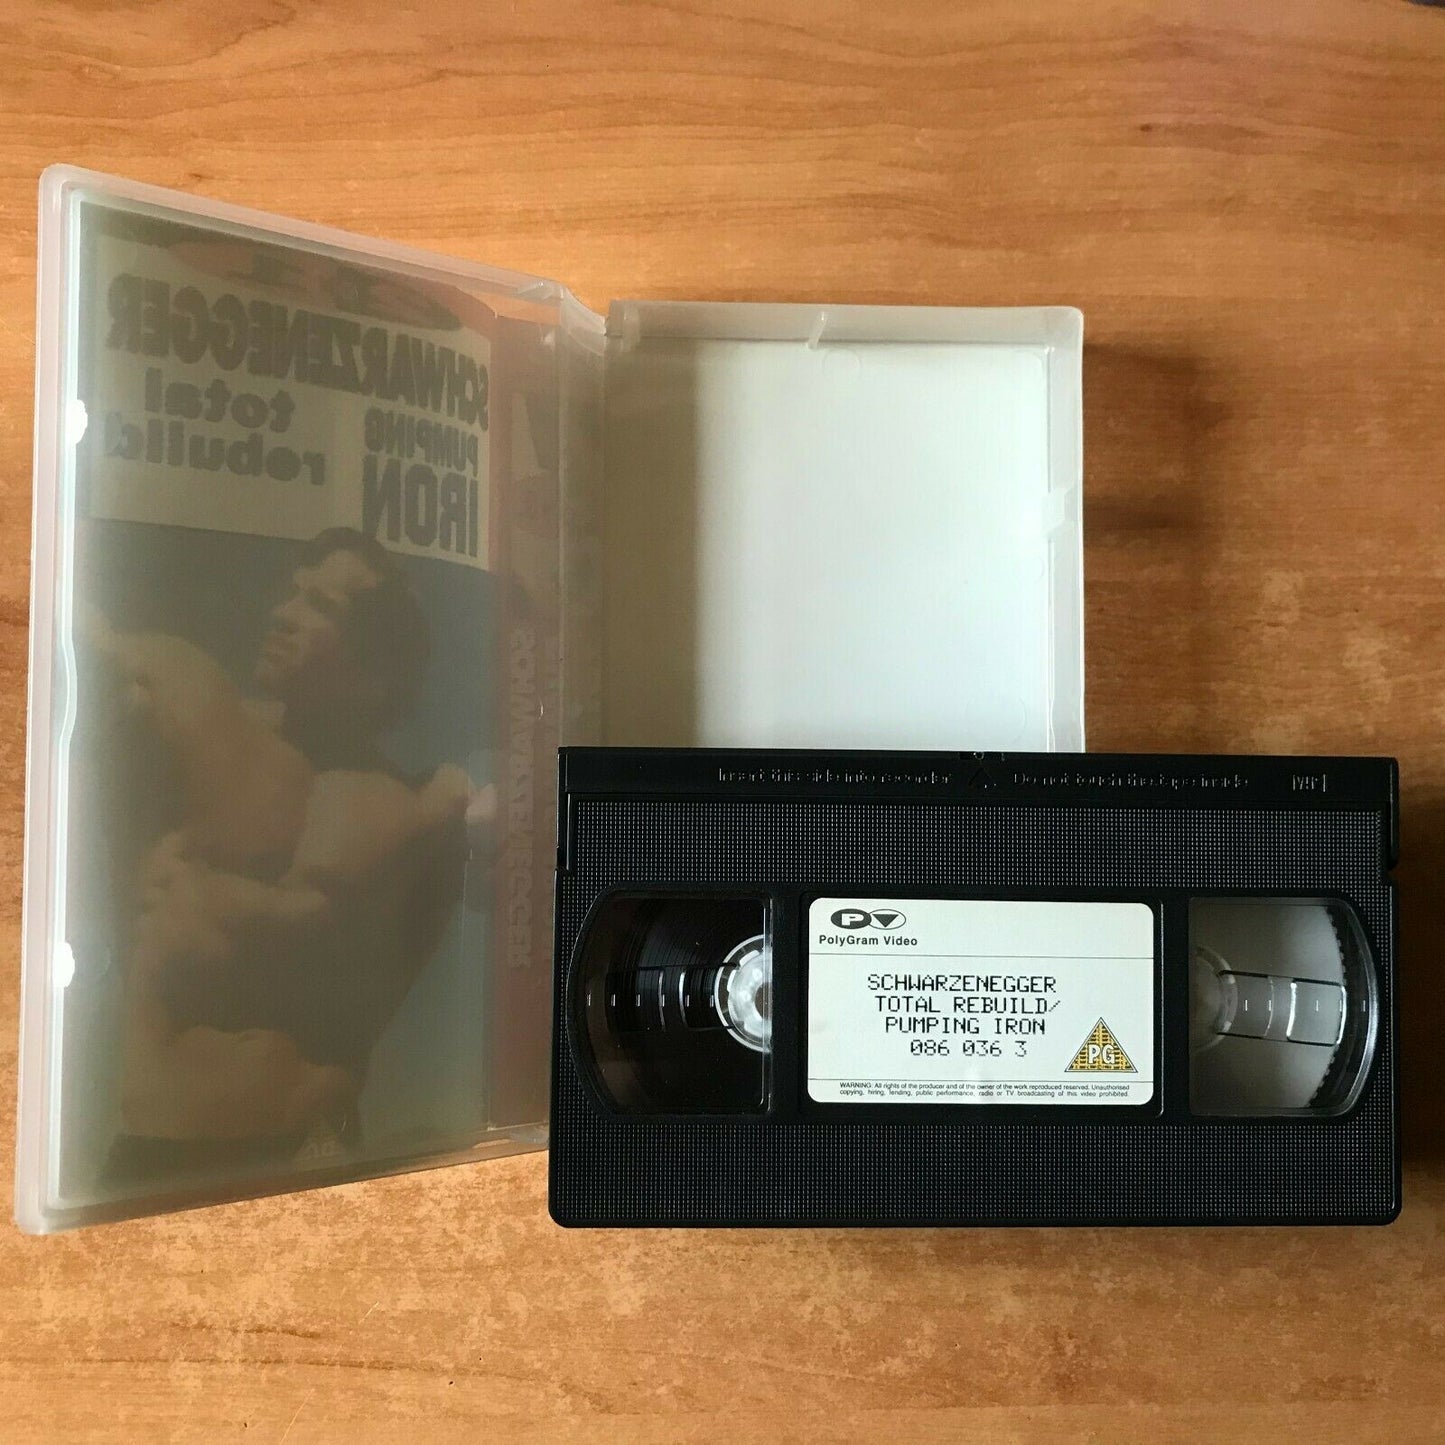 Schwarzenegger: Pumping Iron / Total Rebulding - Mr.Olympia - Mr.Olympic - VHS-